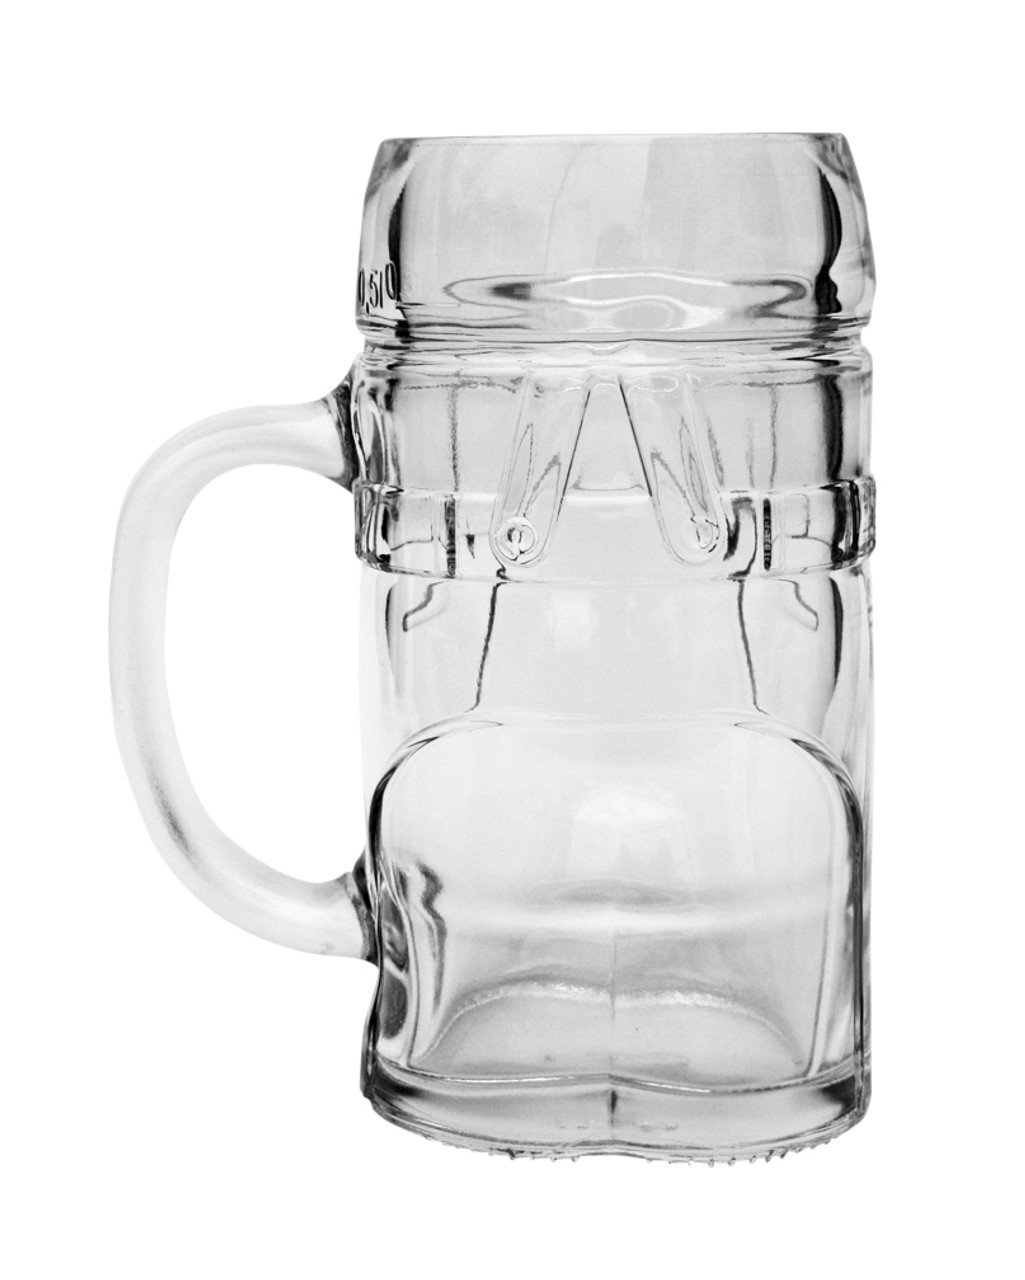 Back of Glass Lederhosen Beer Mug, 0.5L, Empty